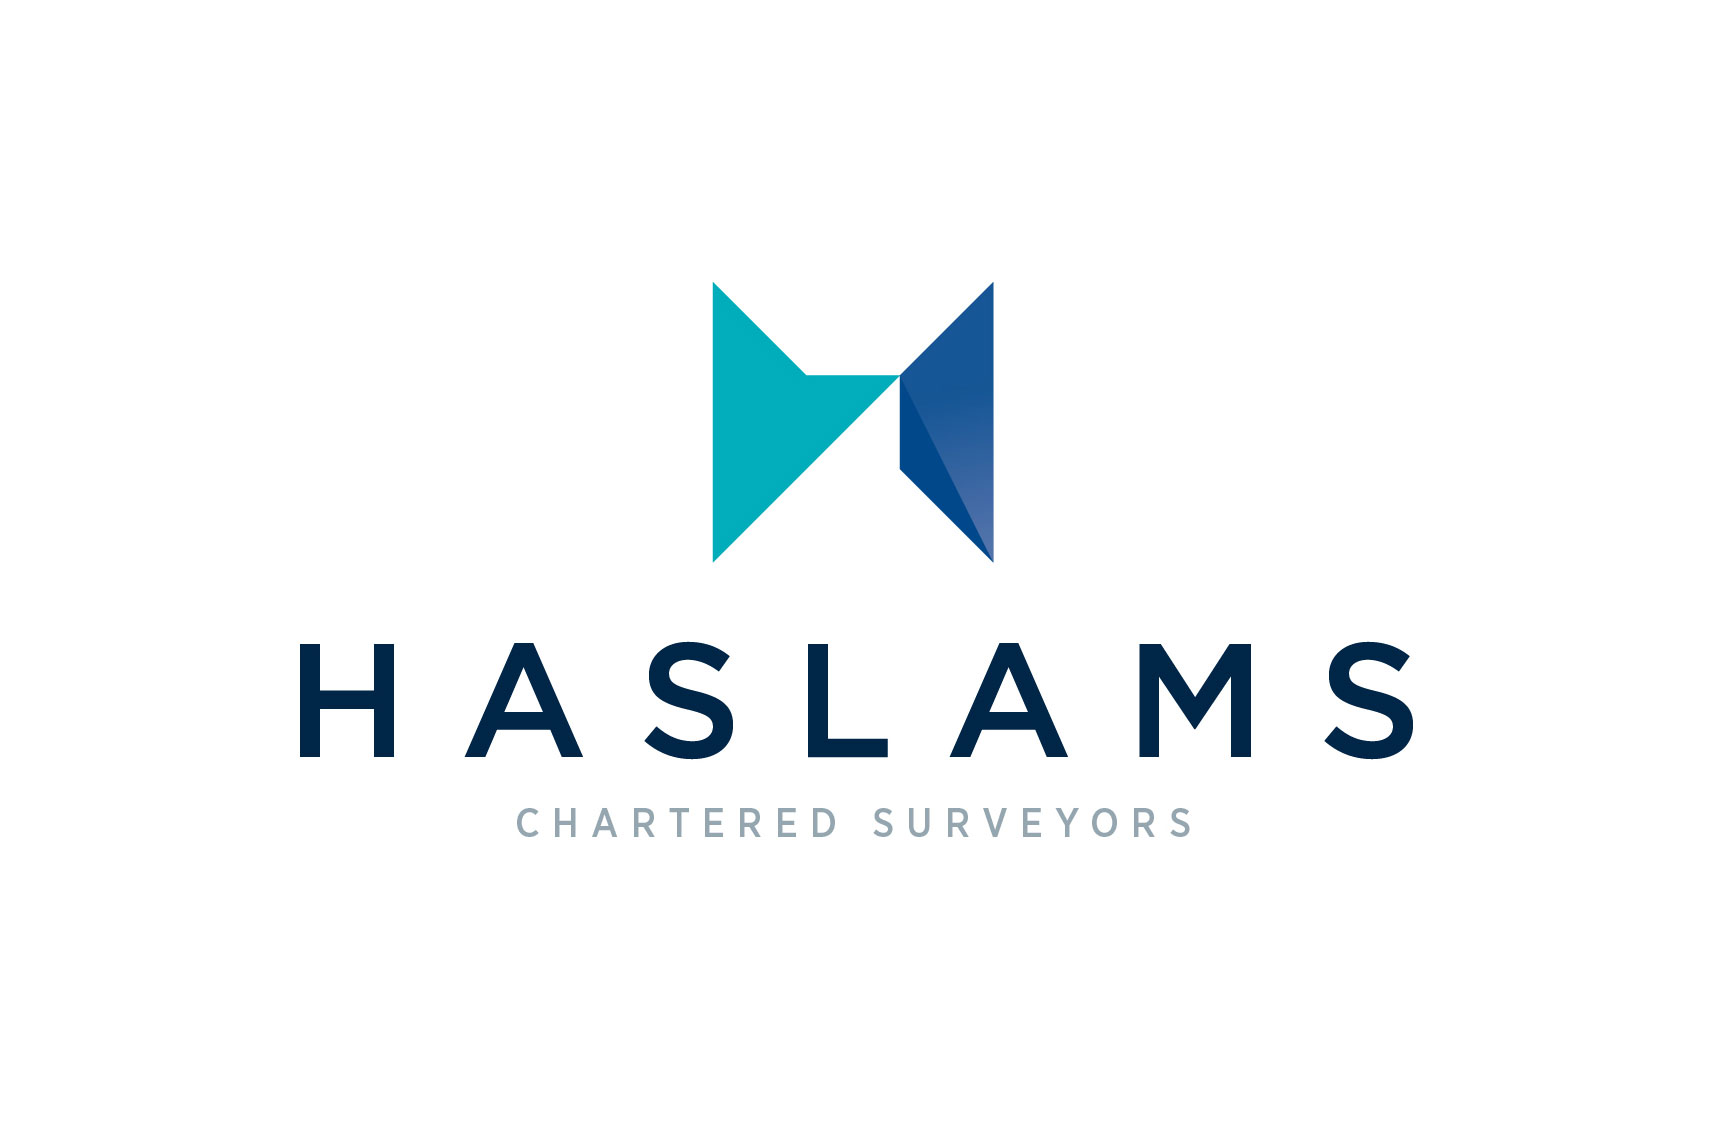 Time for change – Haslams rebrand